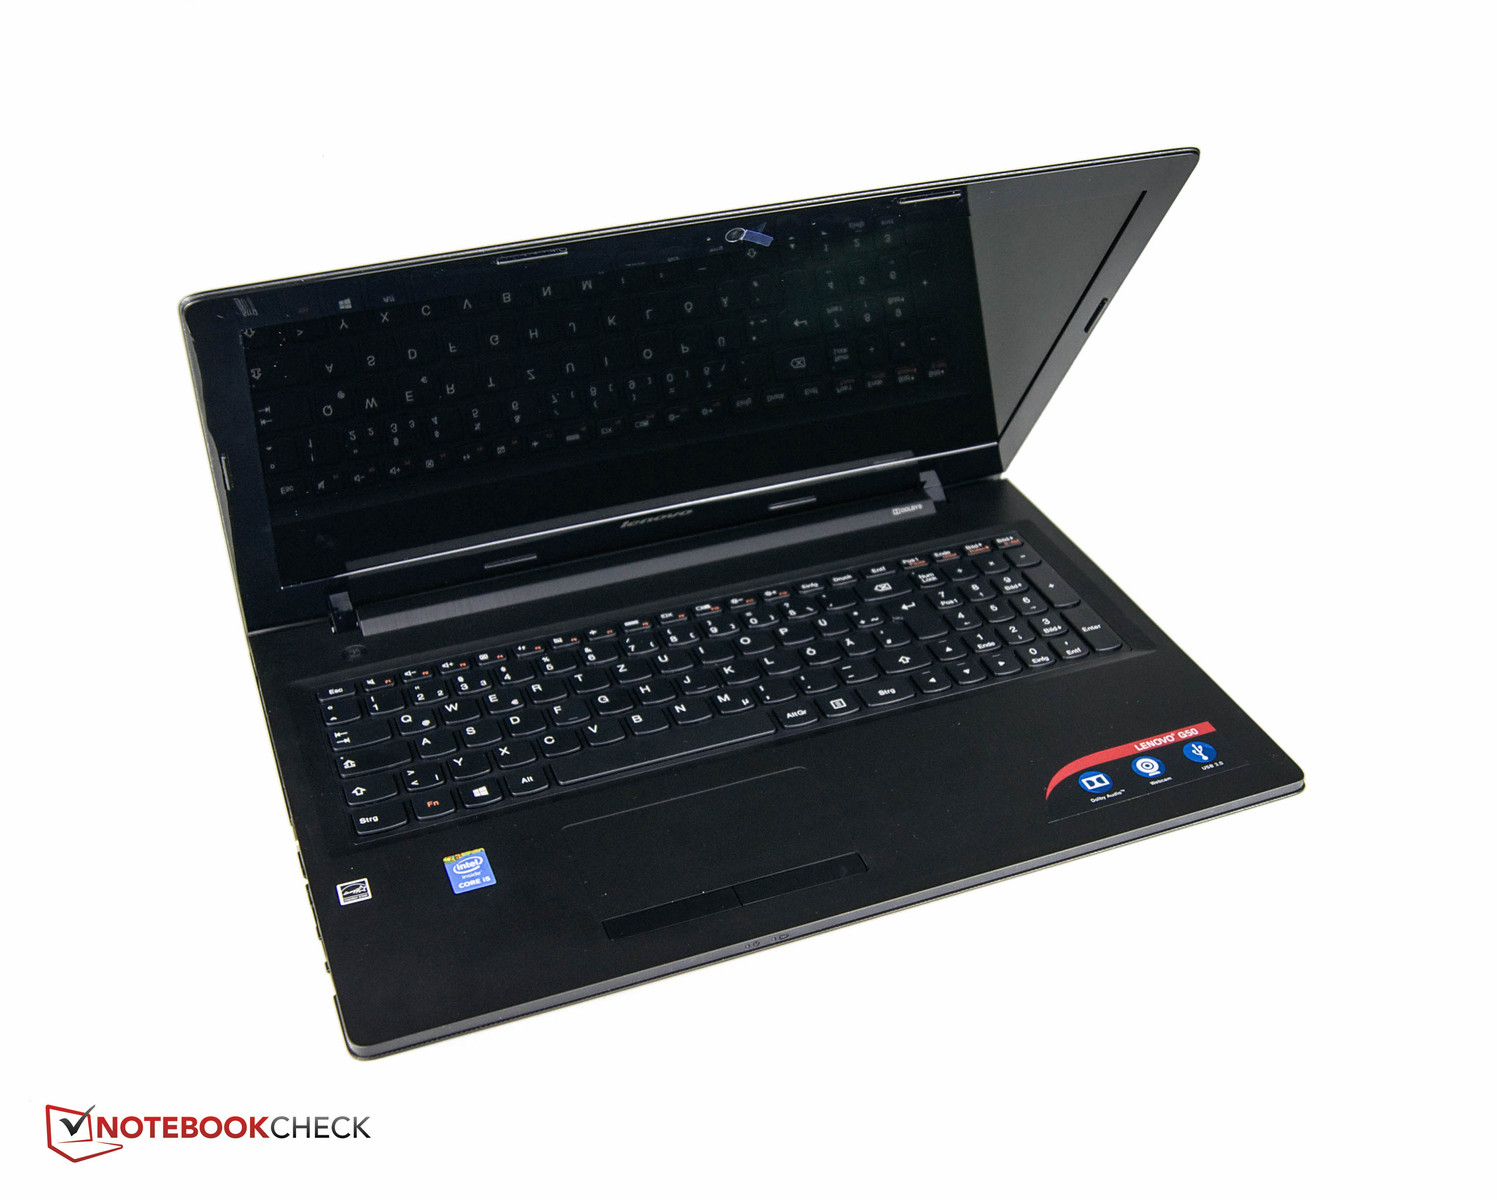 Lenovo G50-80 Notebook Review - NotebookCheck.net Reviews